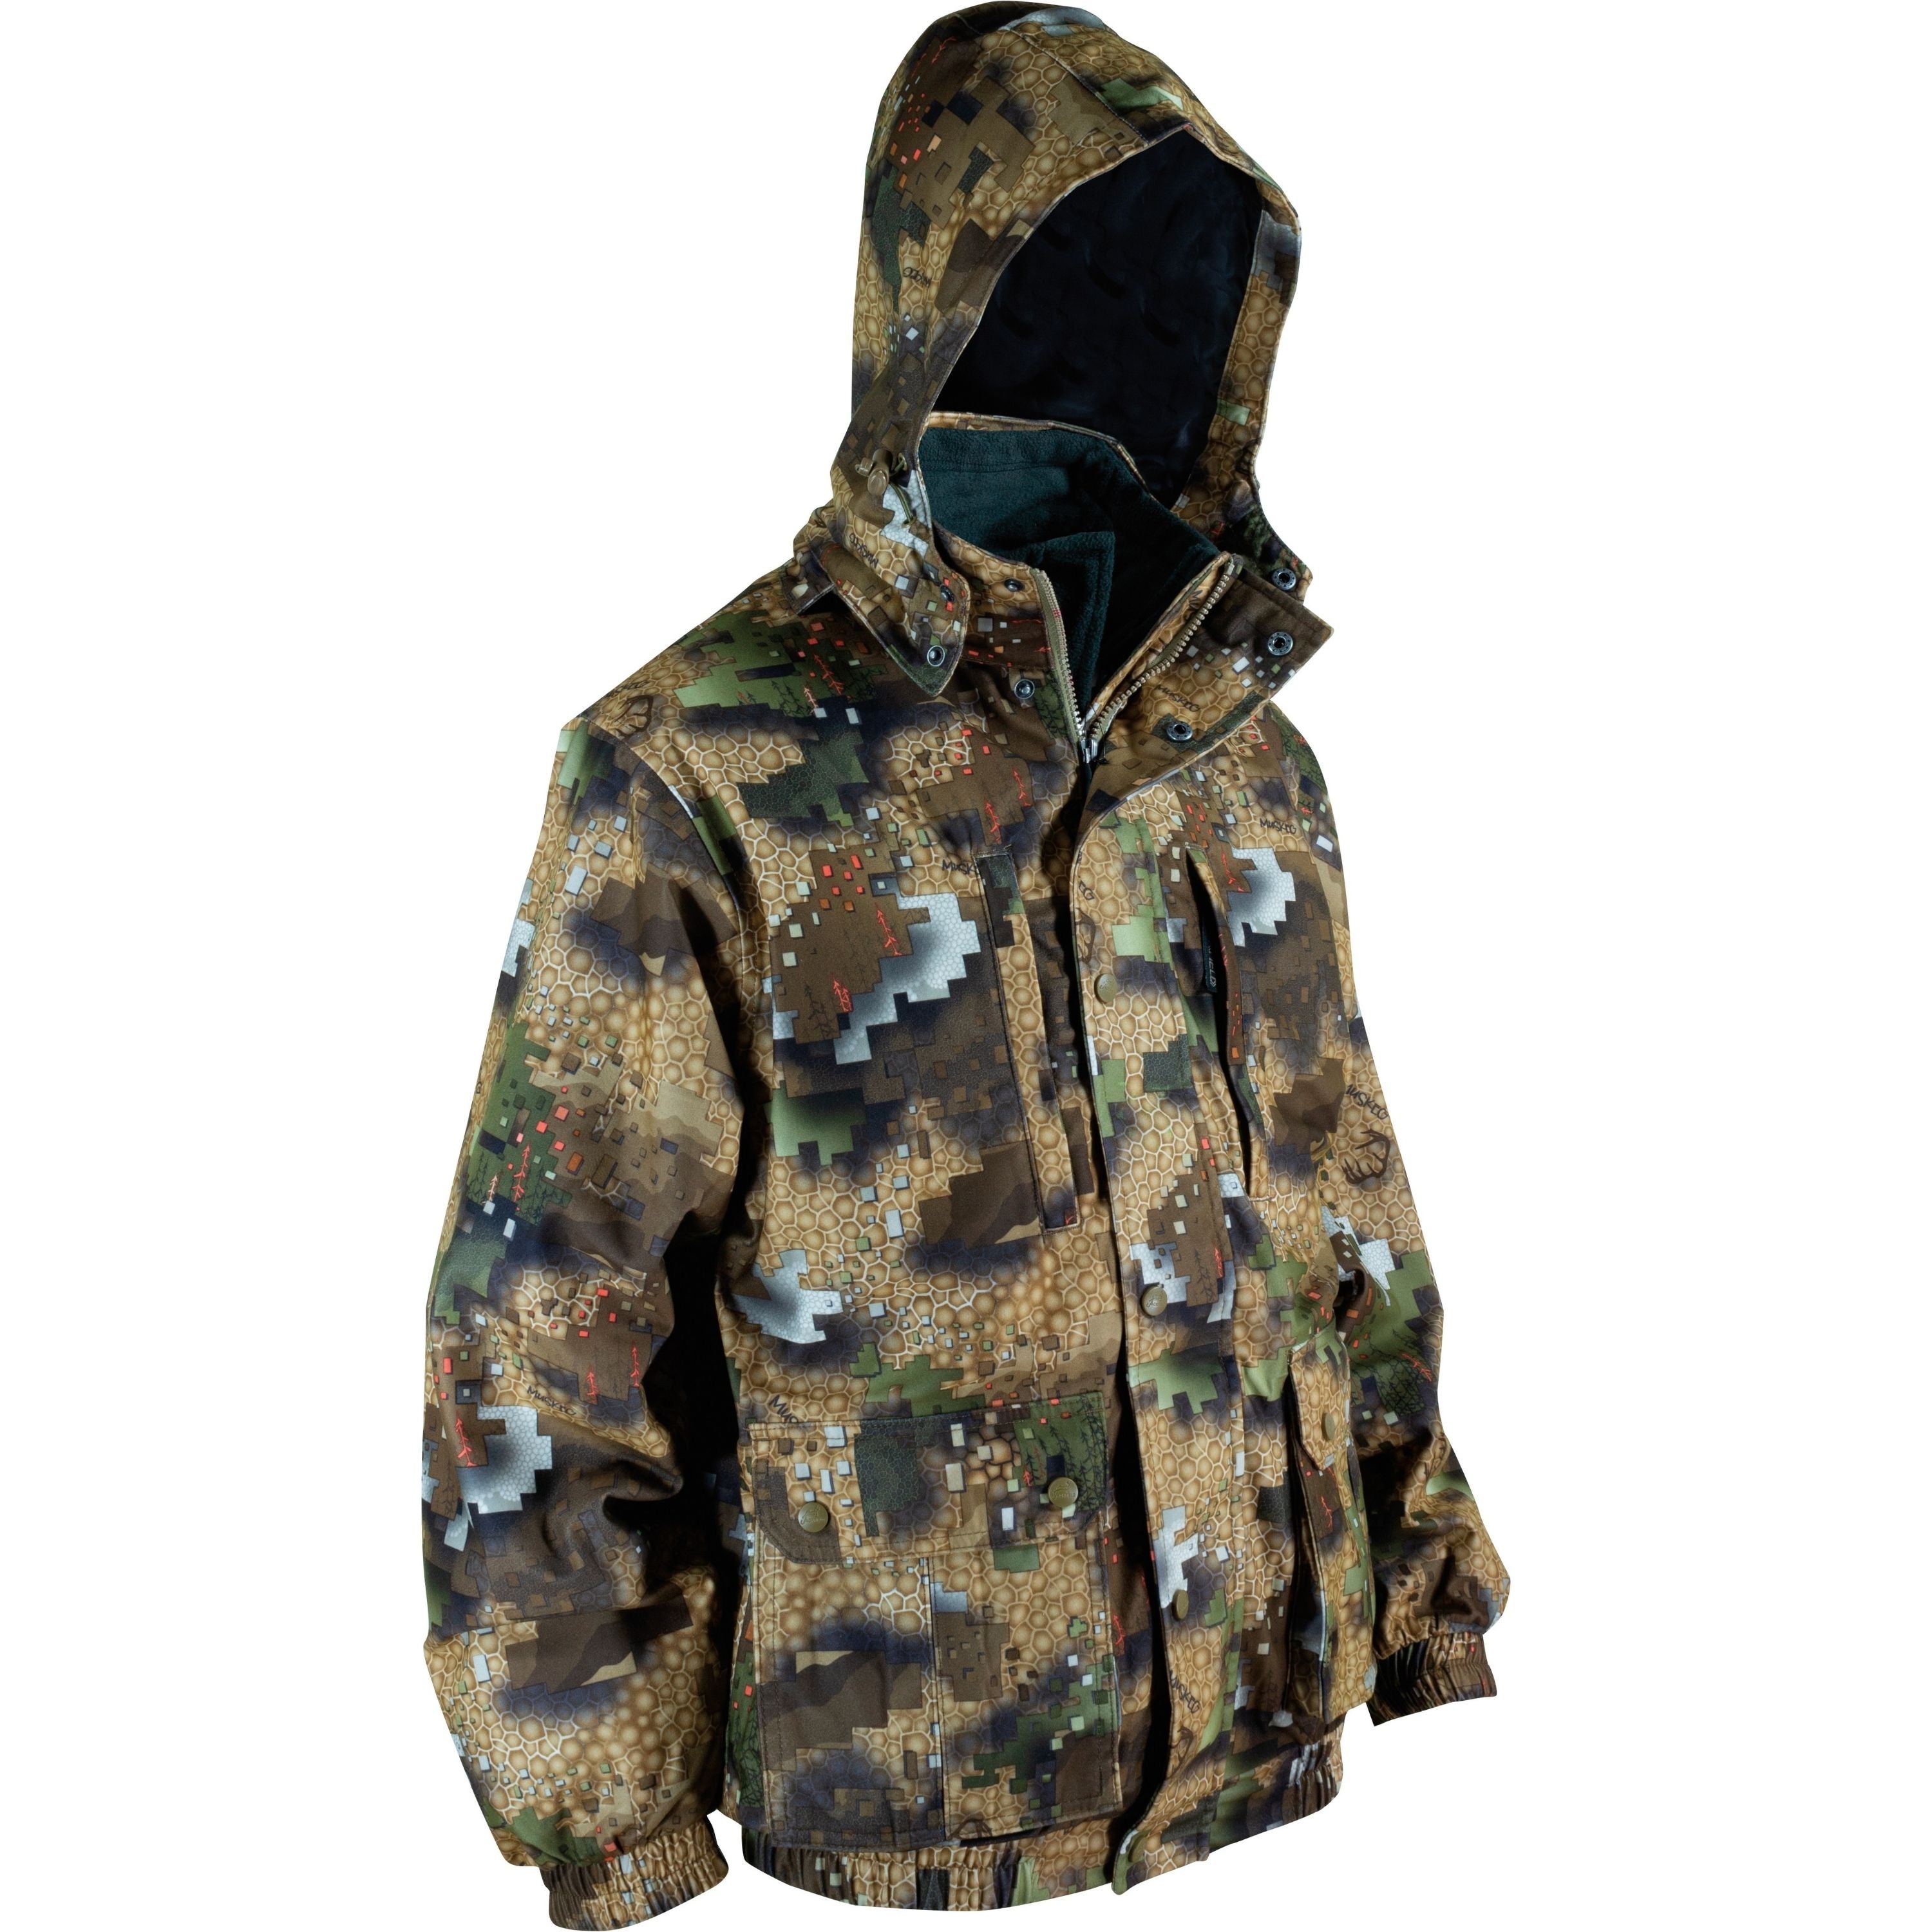 Manteau de chasse 3 en 1 - Homme||3-in-1 Hunting jacket - Men’s